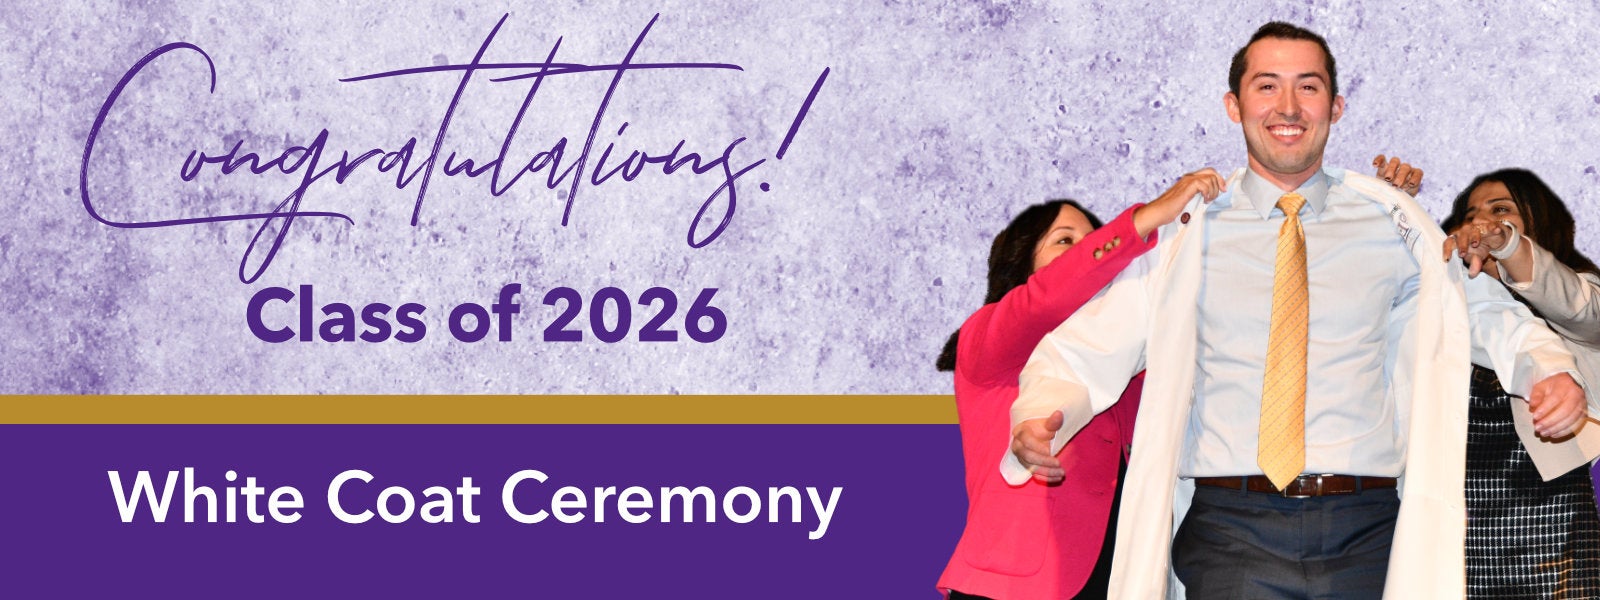 Congratulations Class of 2026: White Coat Ceremony